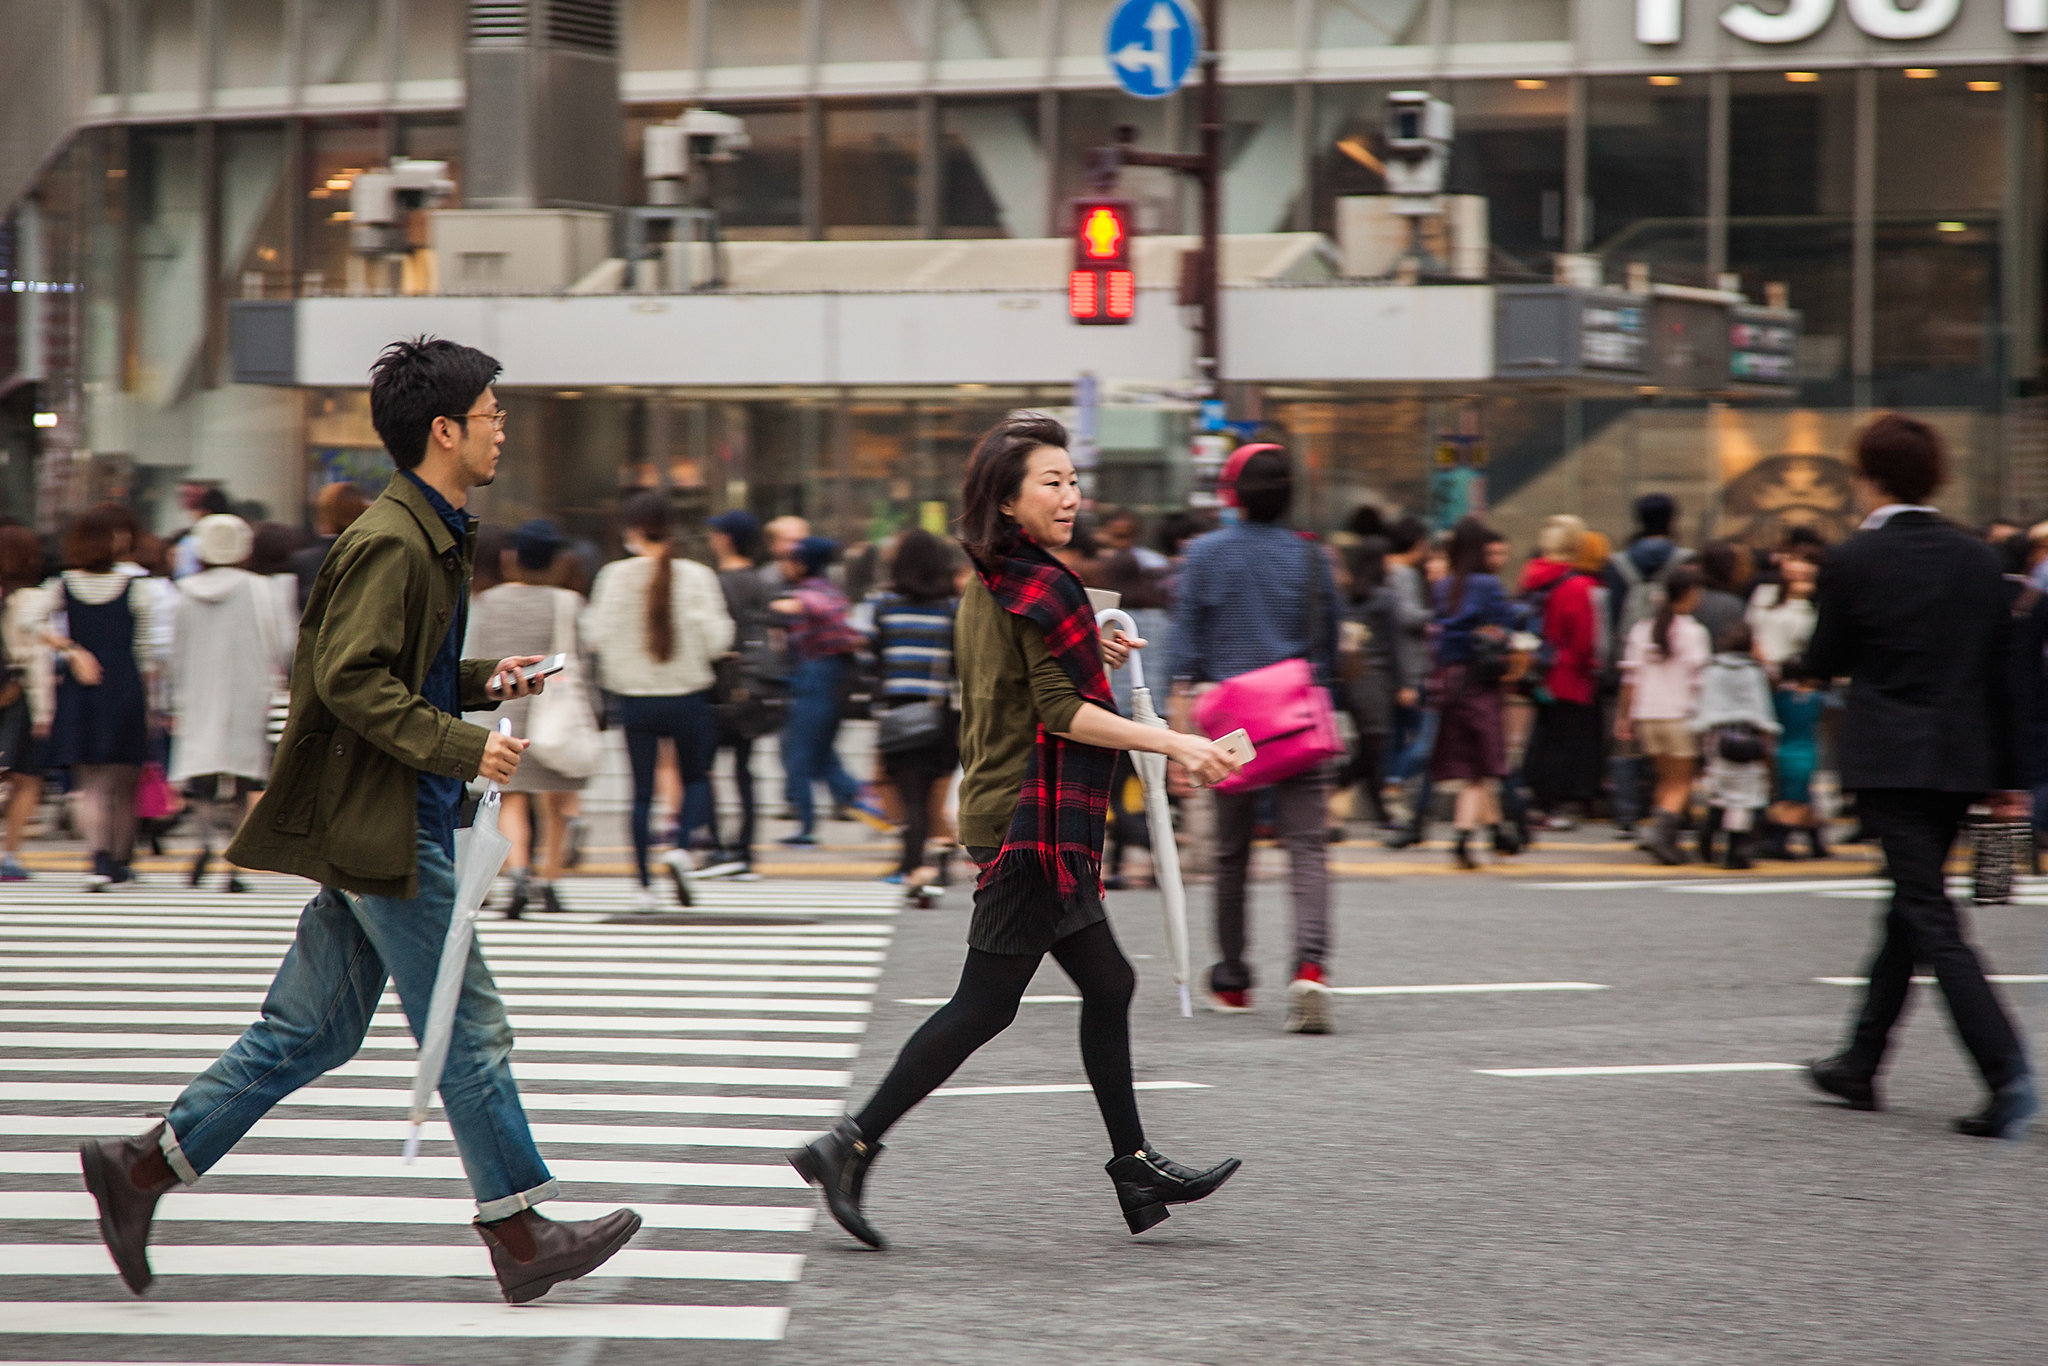 Shibuya Crossing